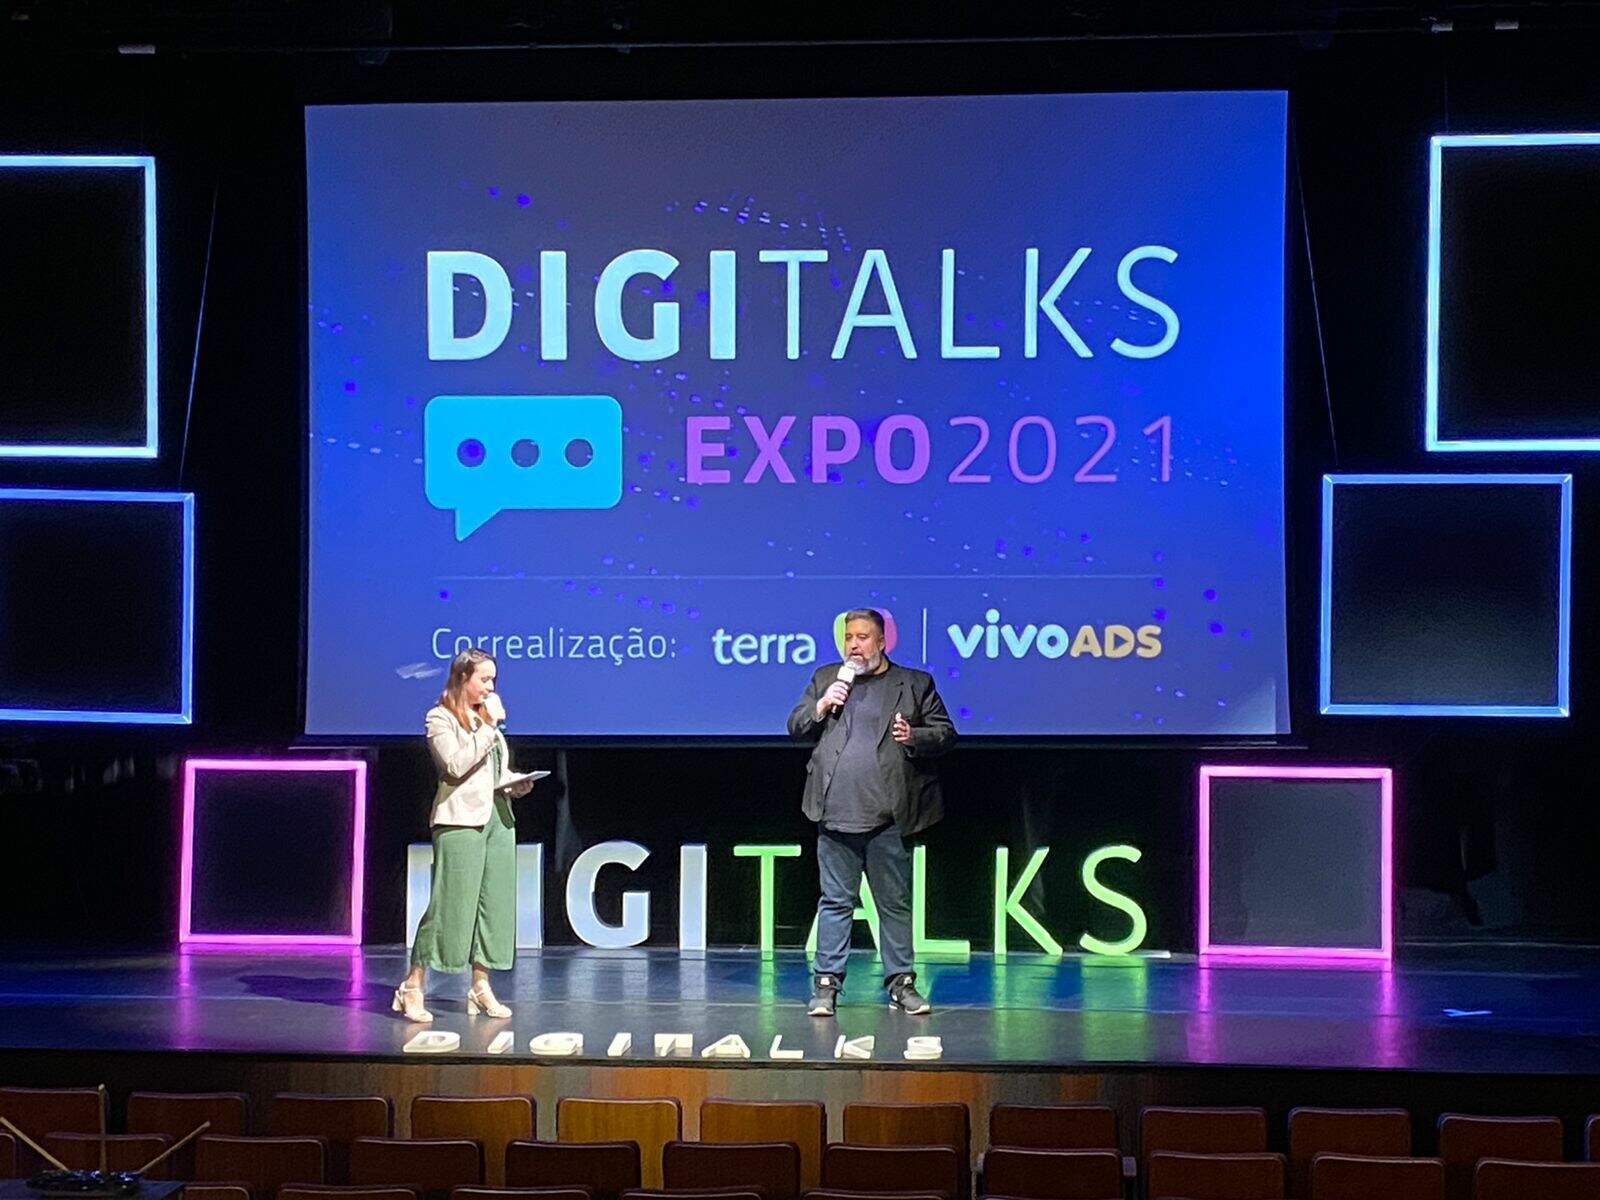 Digitalks Expo 2021 